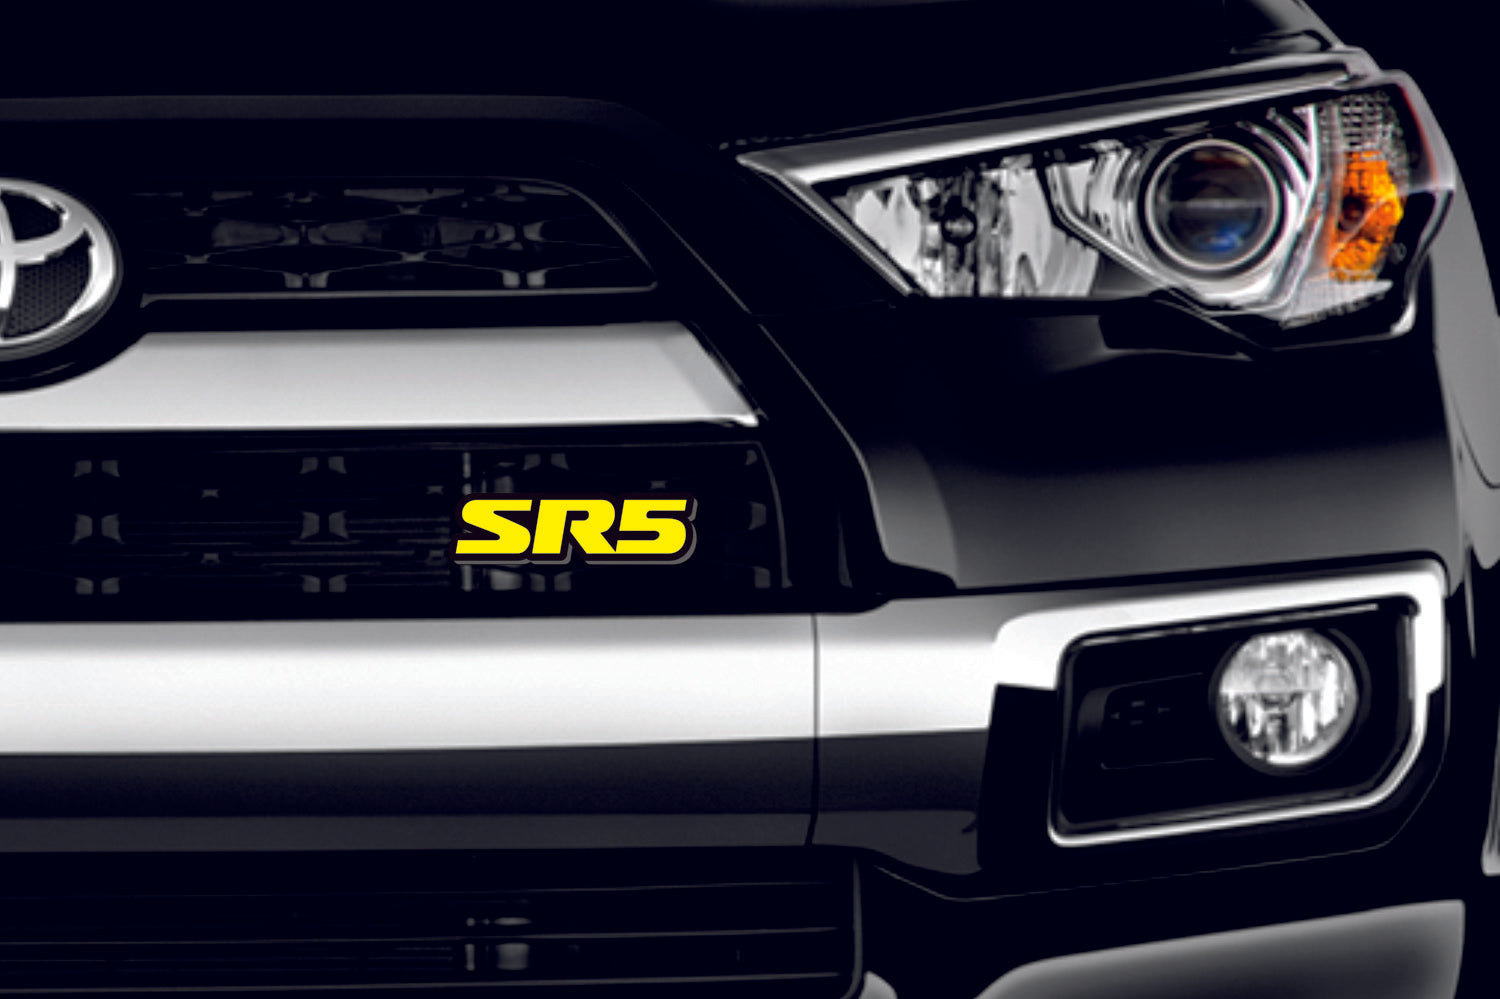 Toyota Radiator grille emblem with SR5 logo (Type 2) - decoinfabric